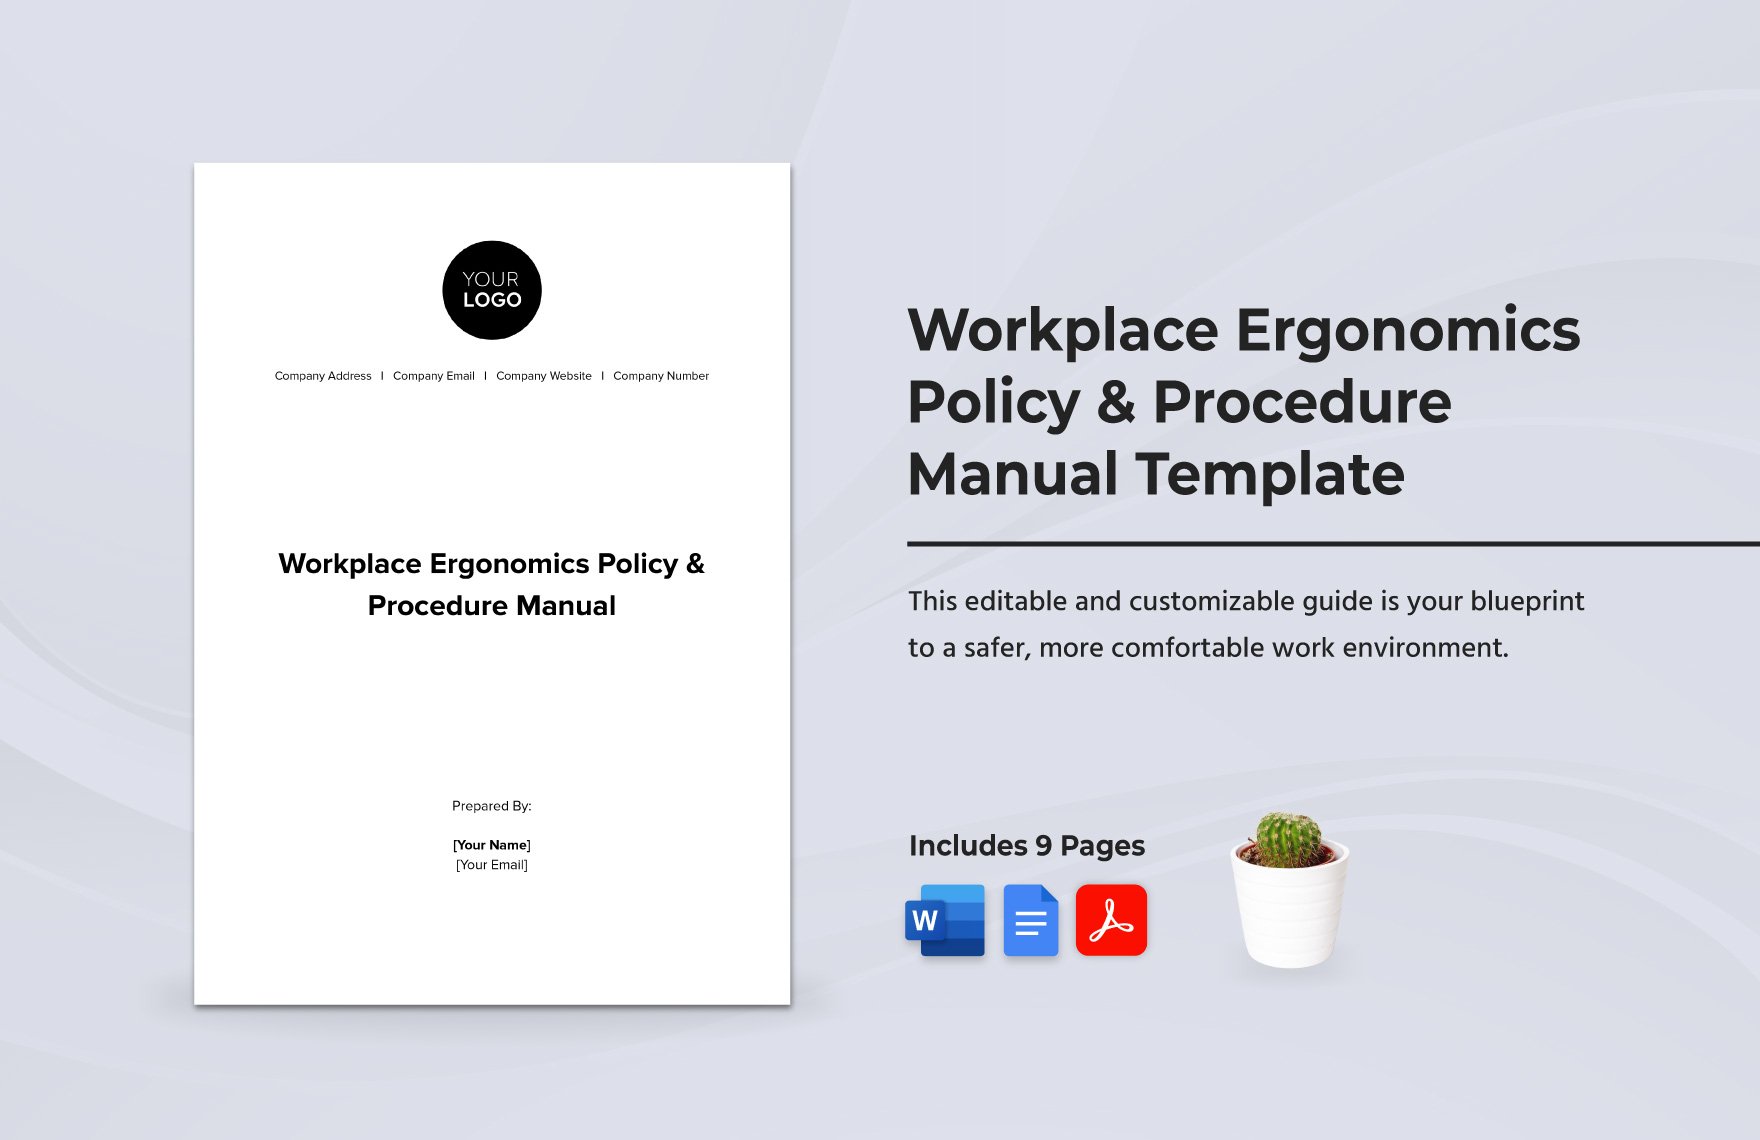 Workplace Ergonomics Policy & Procedure Manual Template